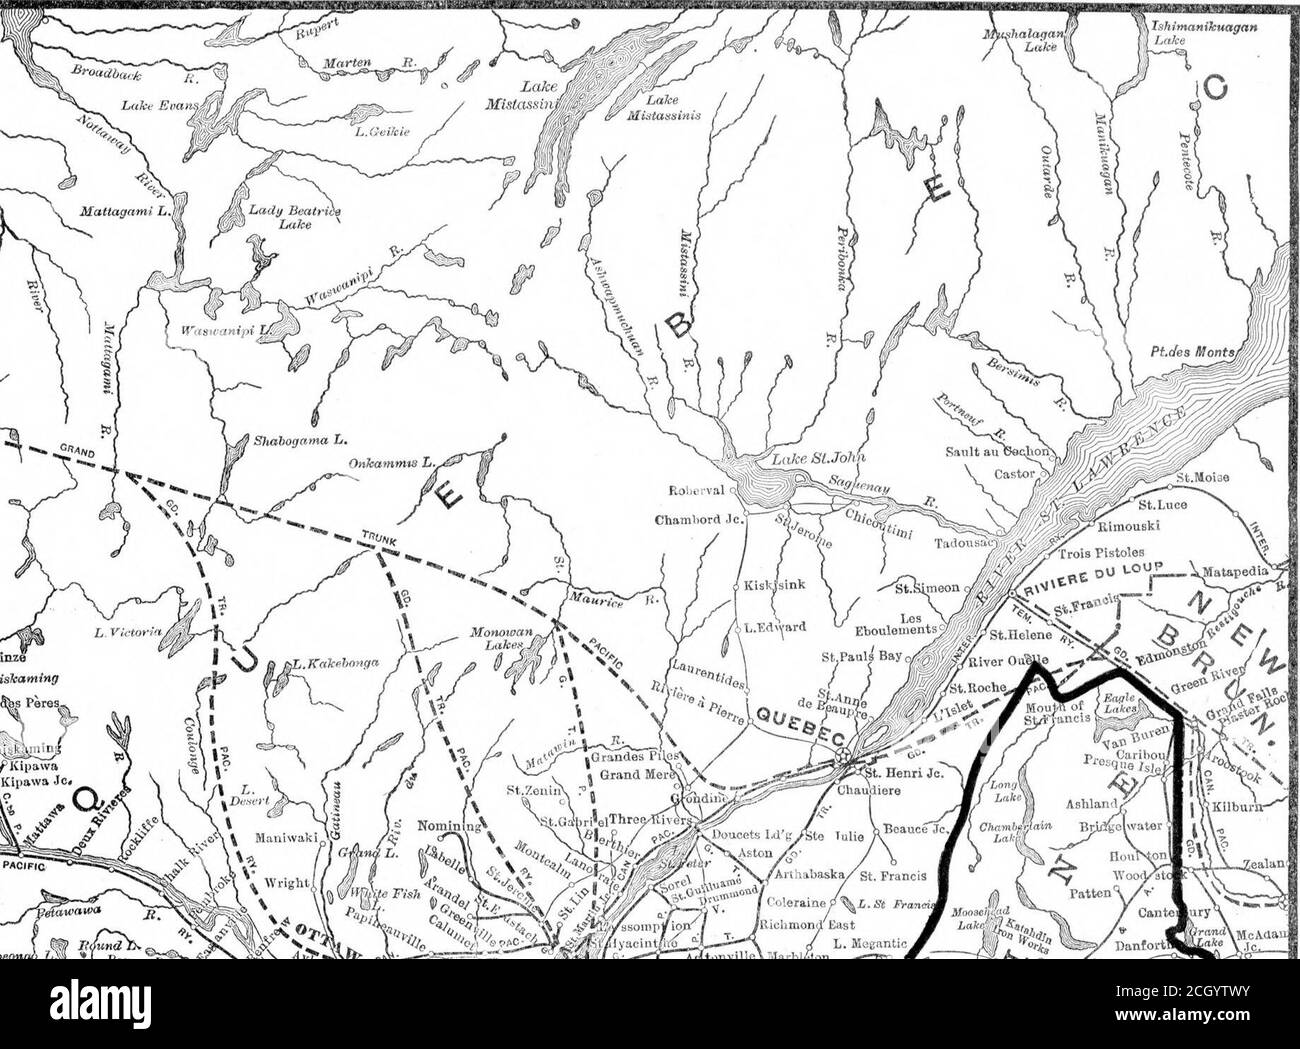 Railway traffic maps : prepared for the course in inter-state commerce . 5*  J Pack f.Opem. lidund k^ N^RB^^ftffA^^mJbart SMerbrooke □VgooI mksliire •»  MonscinV^^ ^jiTrnvHi/ille □oPy^Ljnos] Y^^^^J -O Carrebasset -T 2;4jjii)o